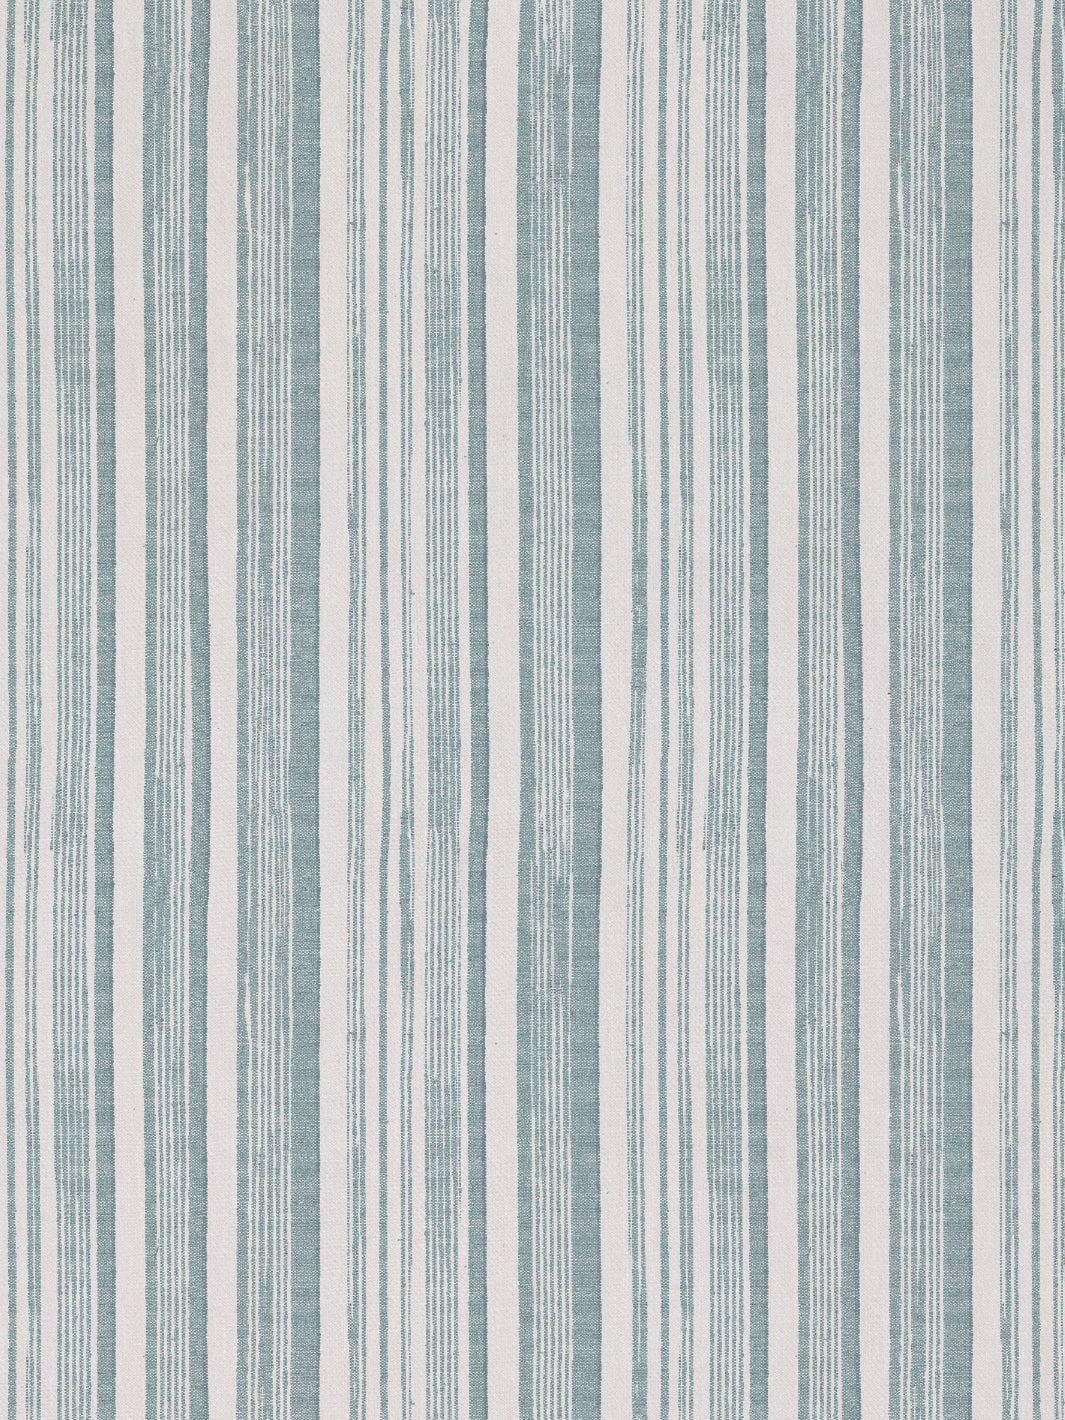 'Stuart Stripe' Wallpaper by Nathan Turner - Seafoam